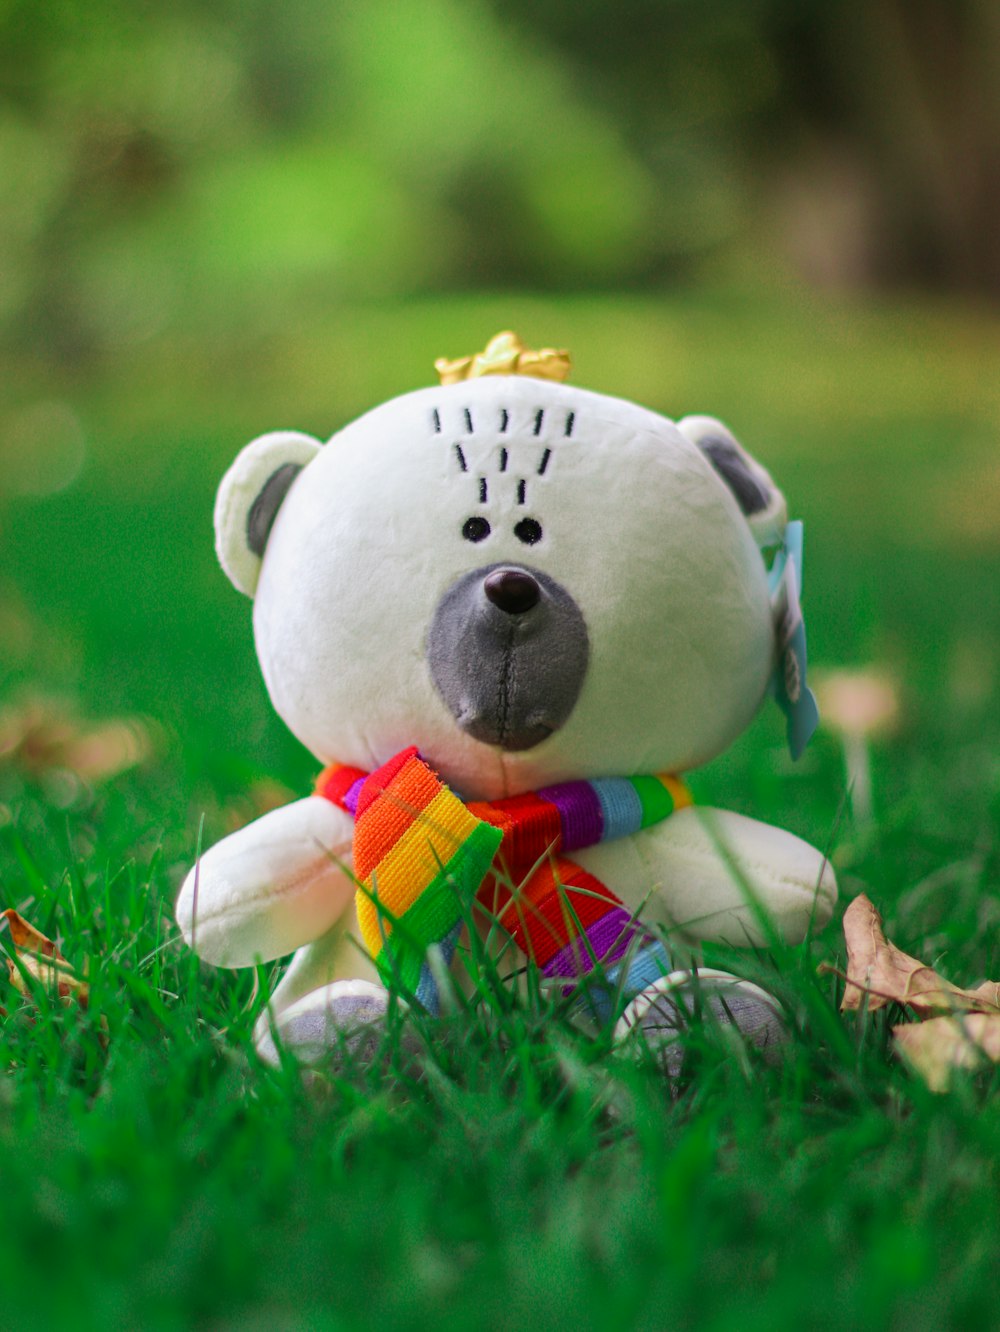 white bear plush toy on green grass during daytime